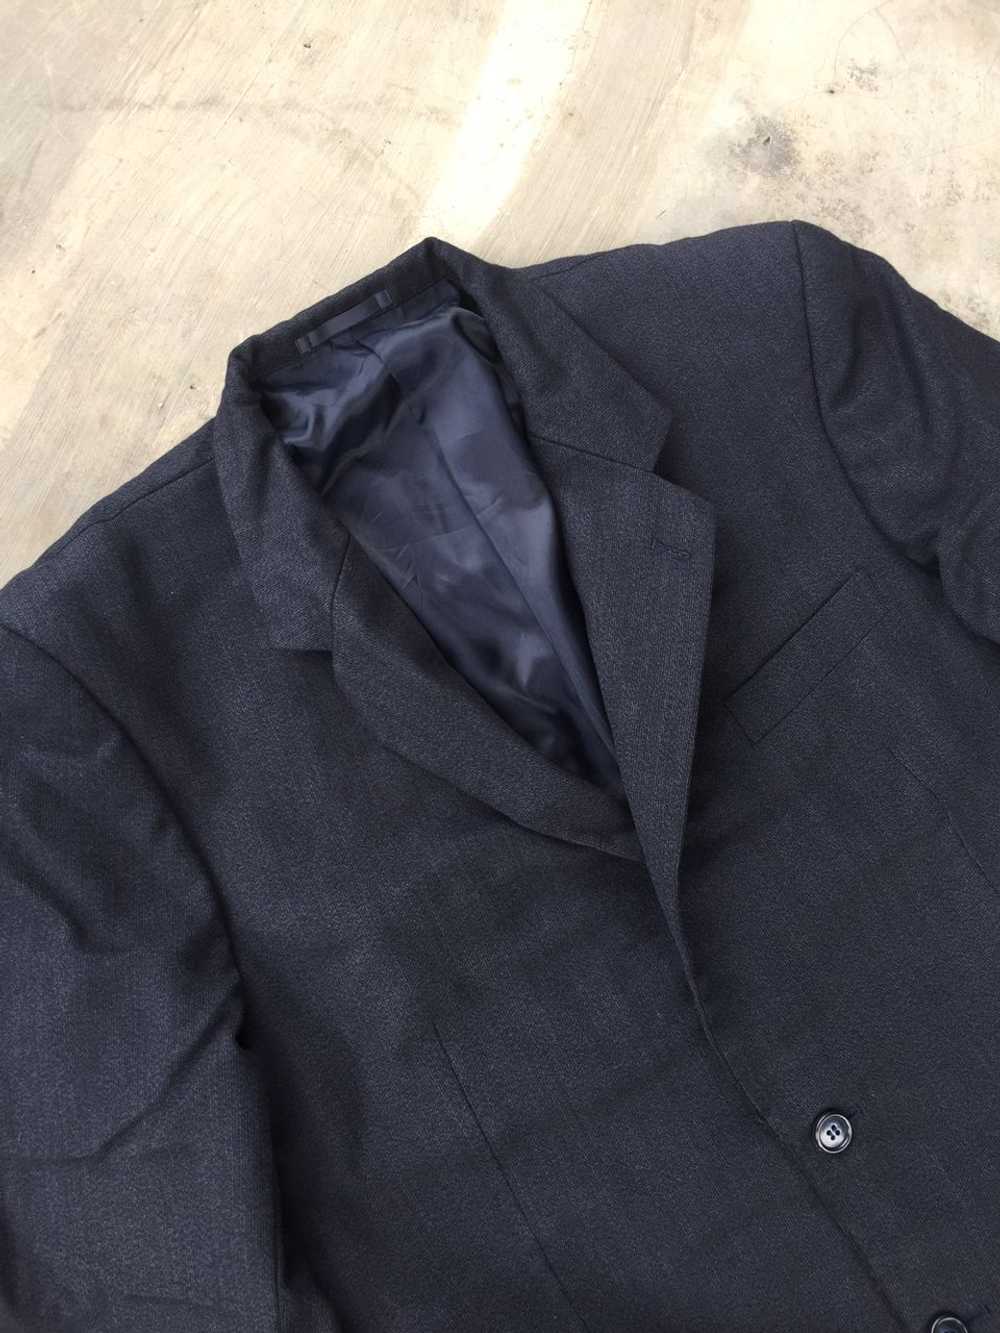 Tailor Made - Valentino Nervini Blazer Suit - image 2